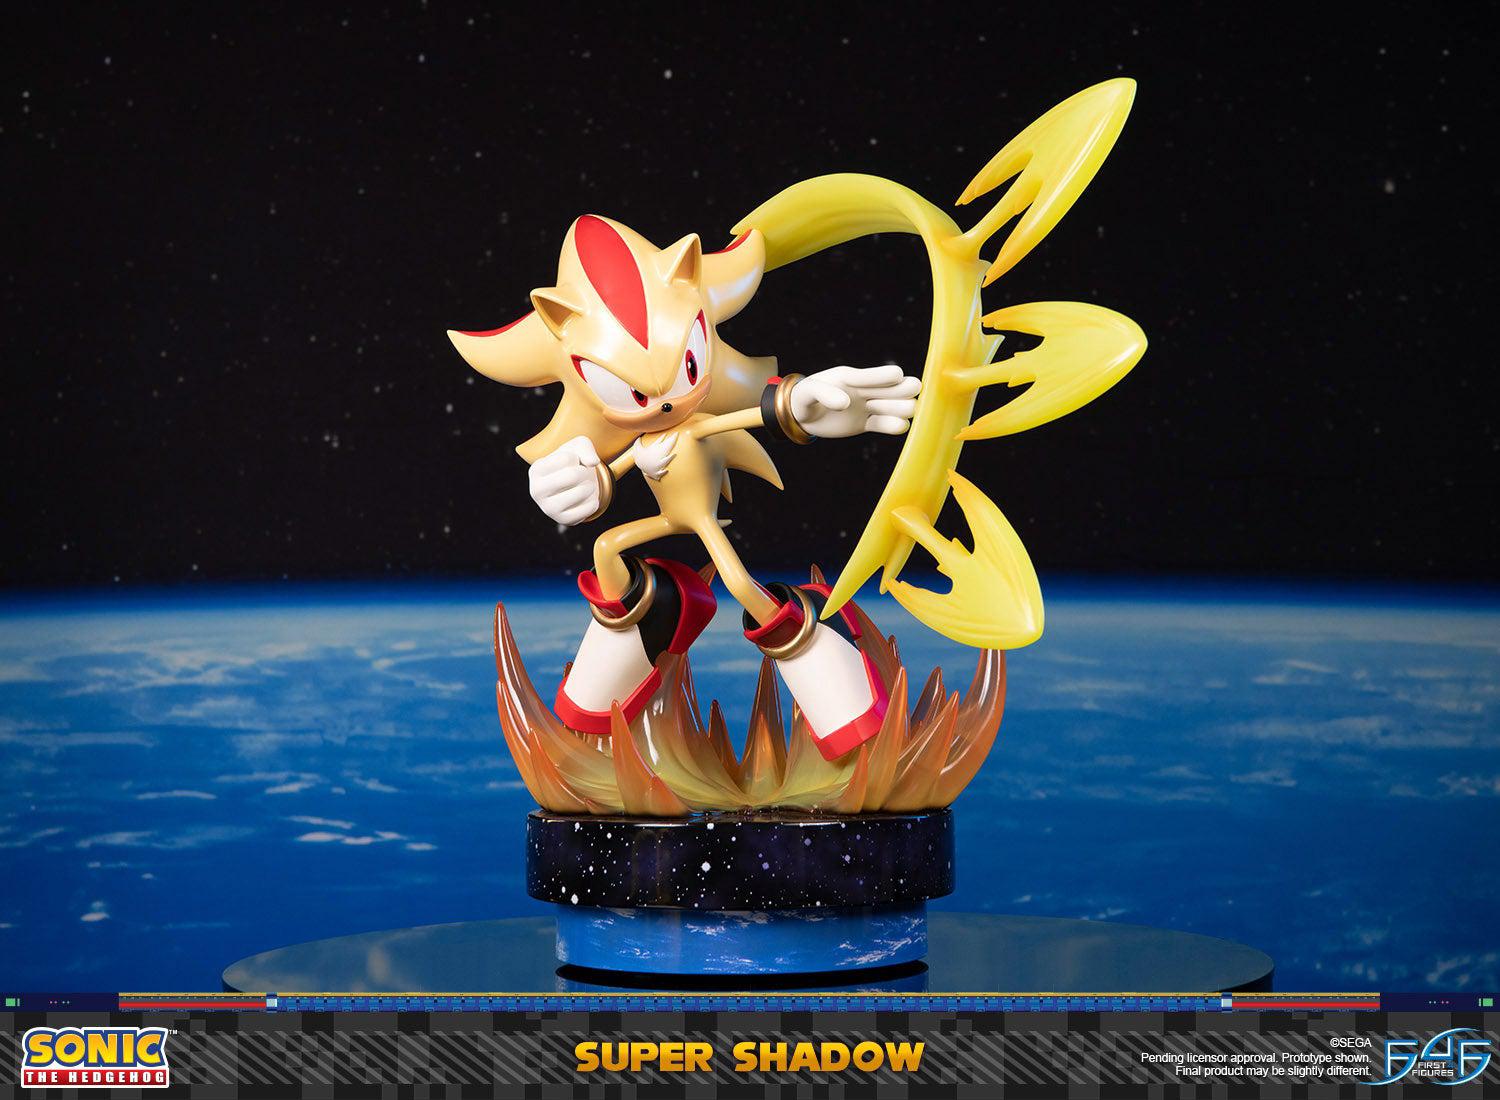 Super shadow, Shadow the hedgehog, Sonic